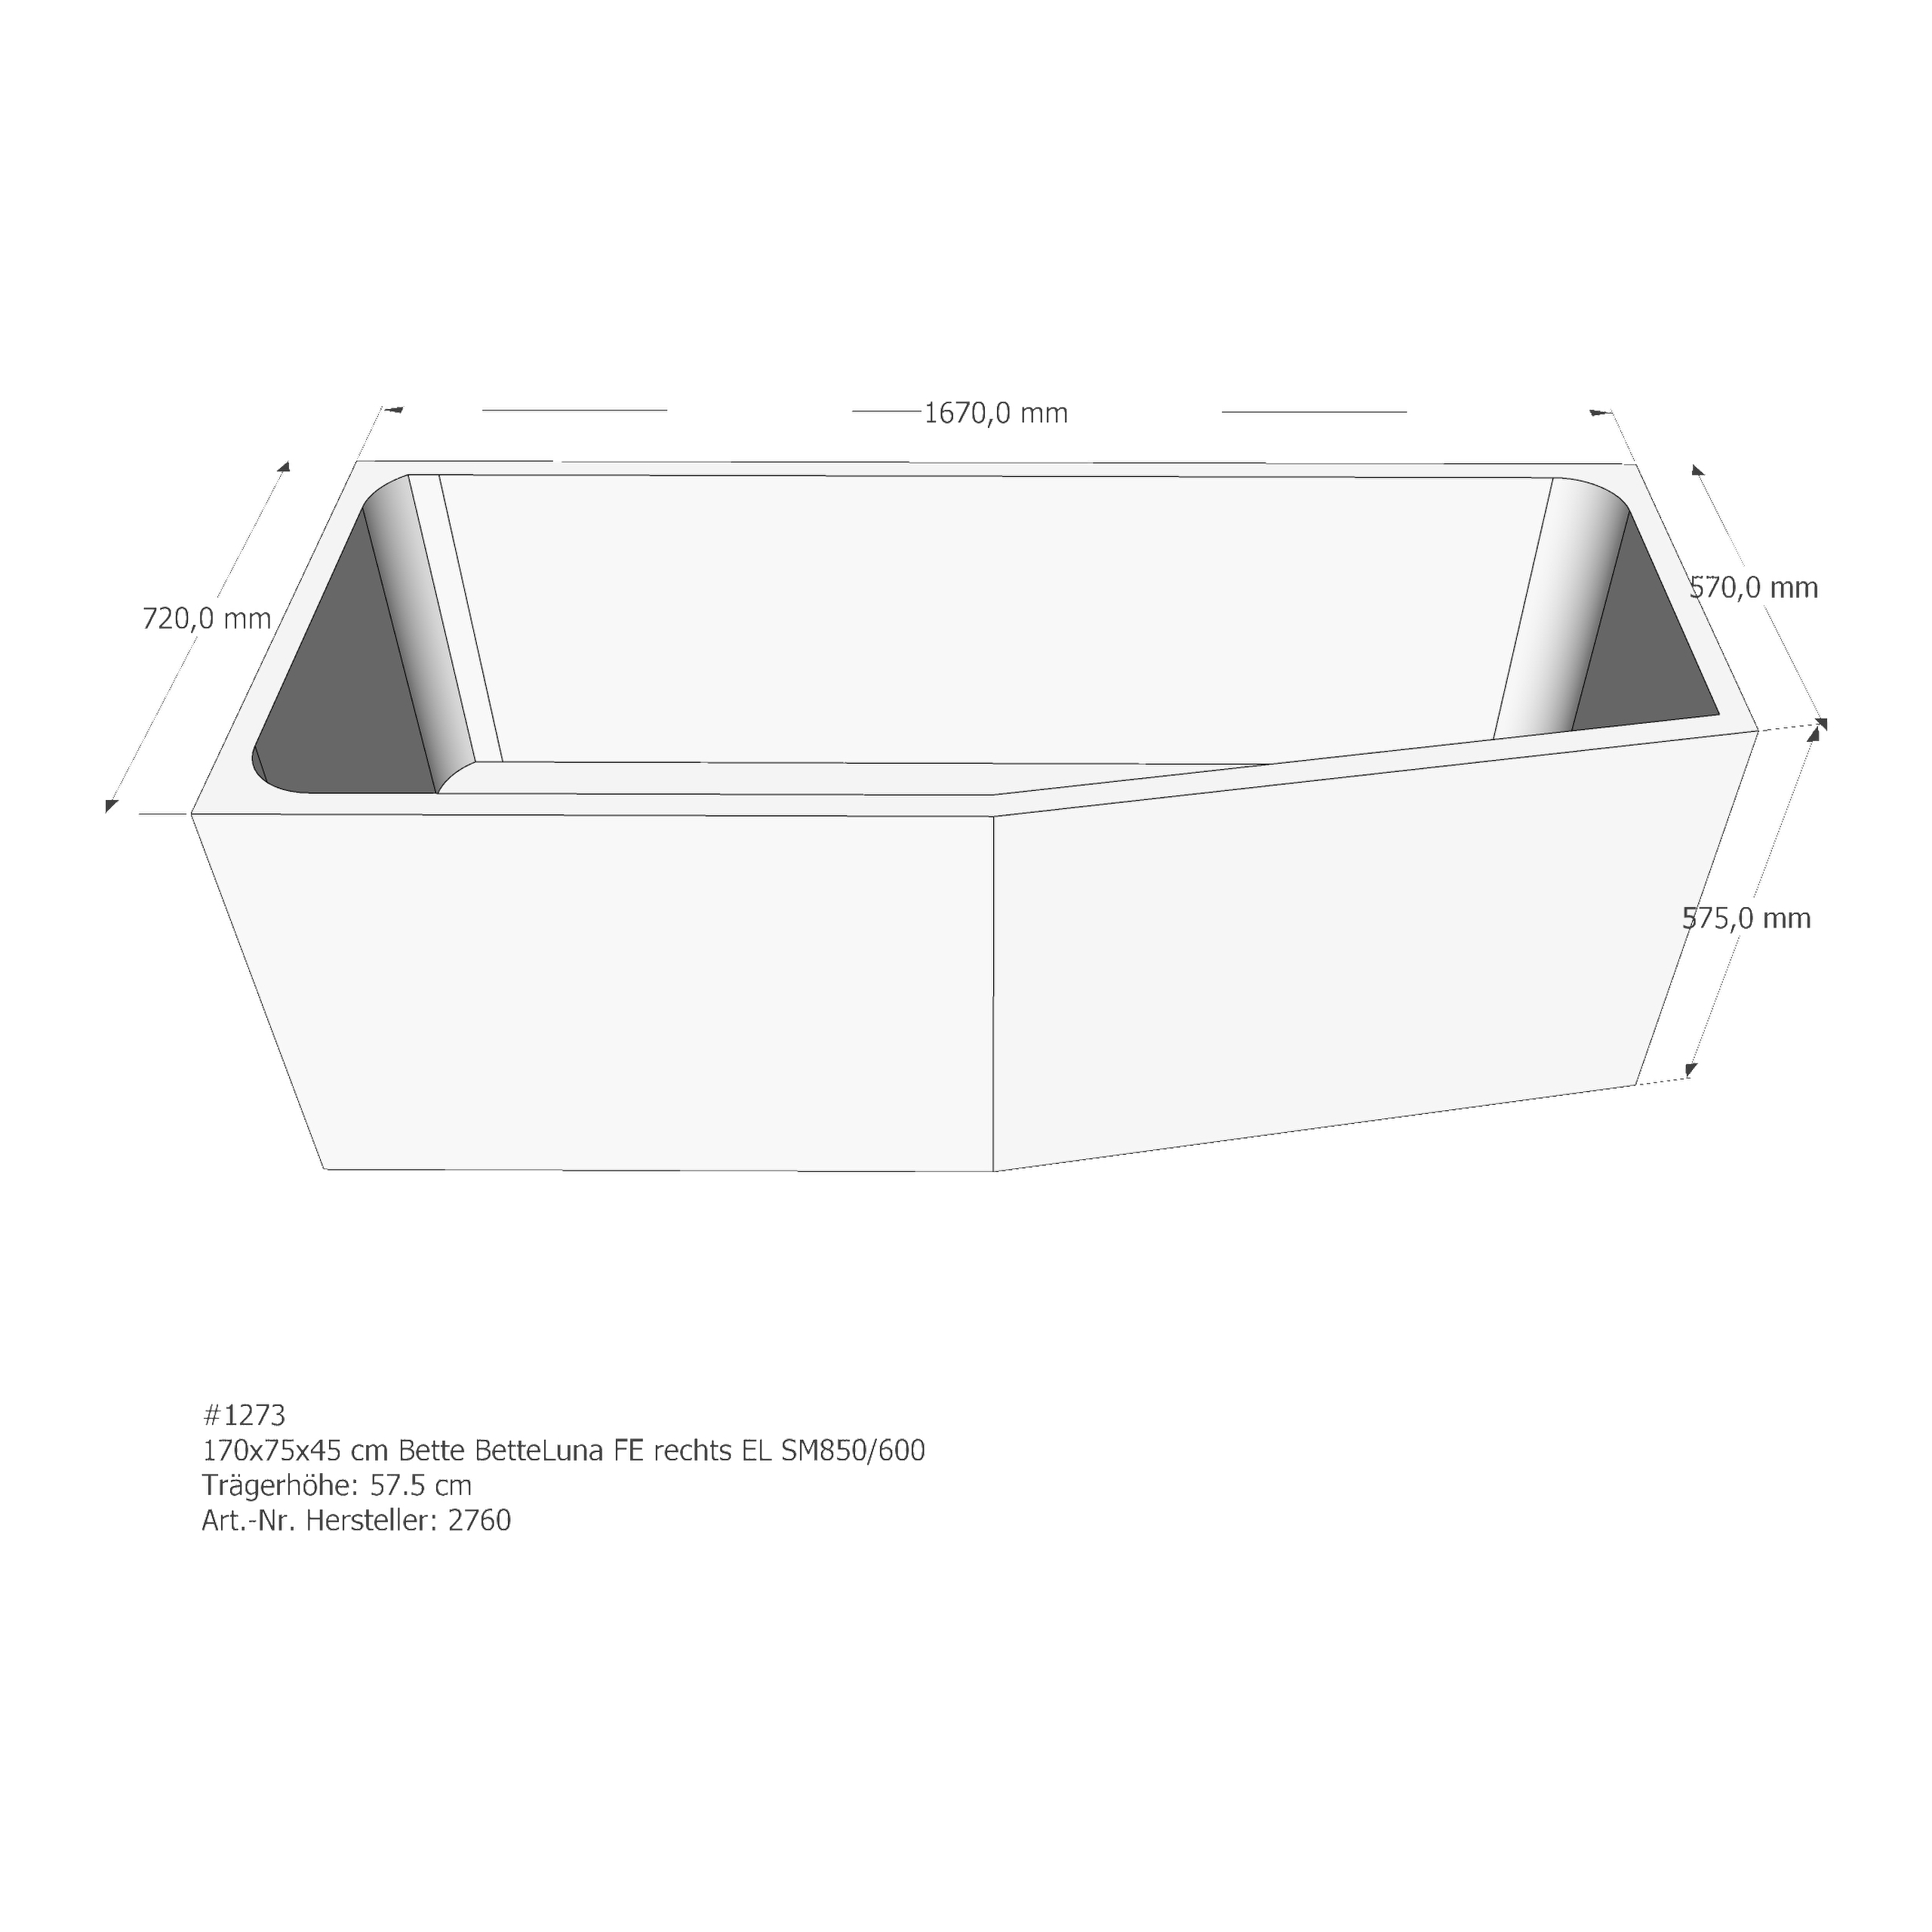 Badewannenträger für Bette BetteLuna rechts 170 × 75 × 45 cm